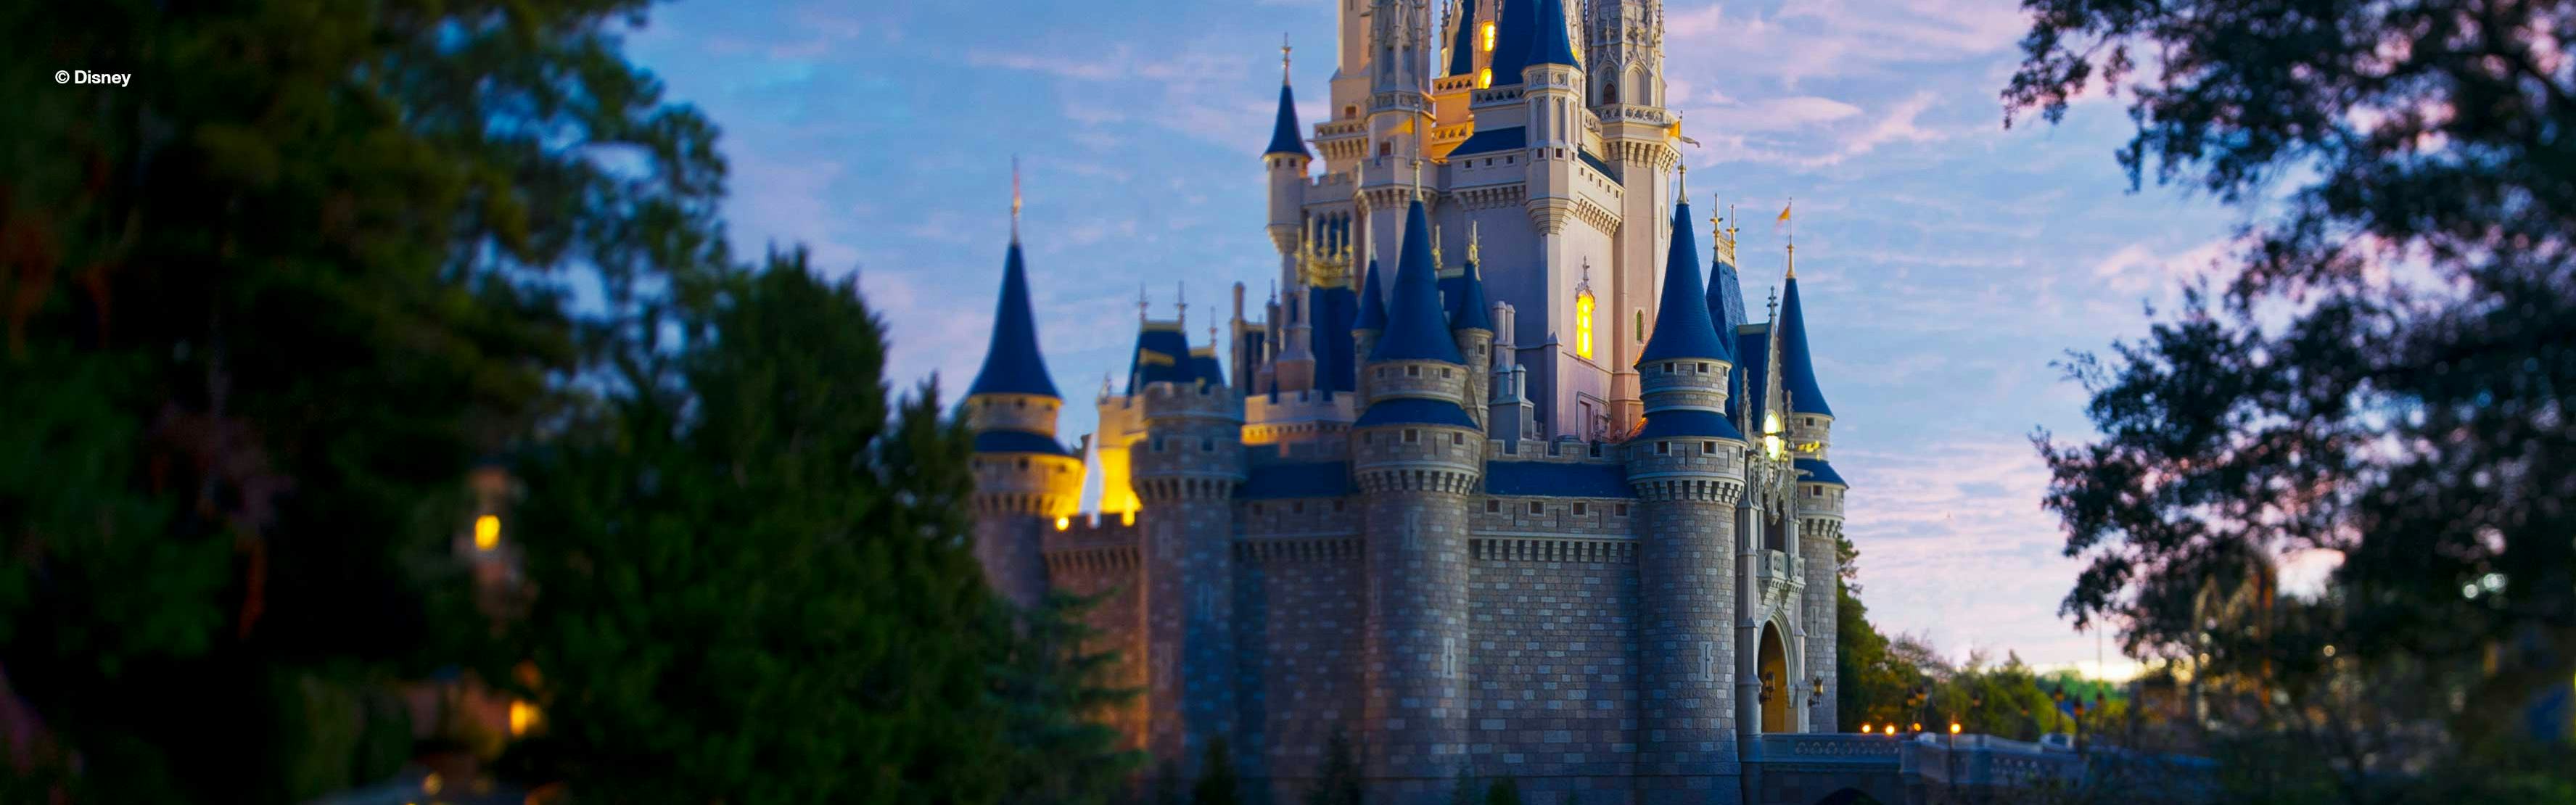 Walt Disney World Resort's Magic Kingdom Castle 